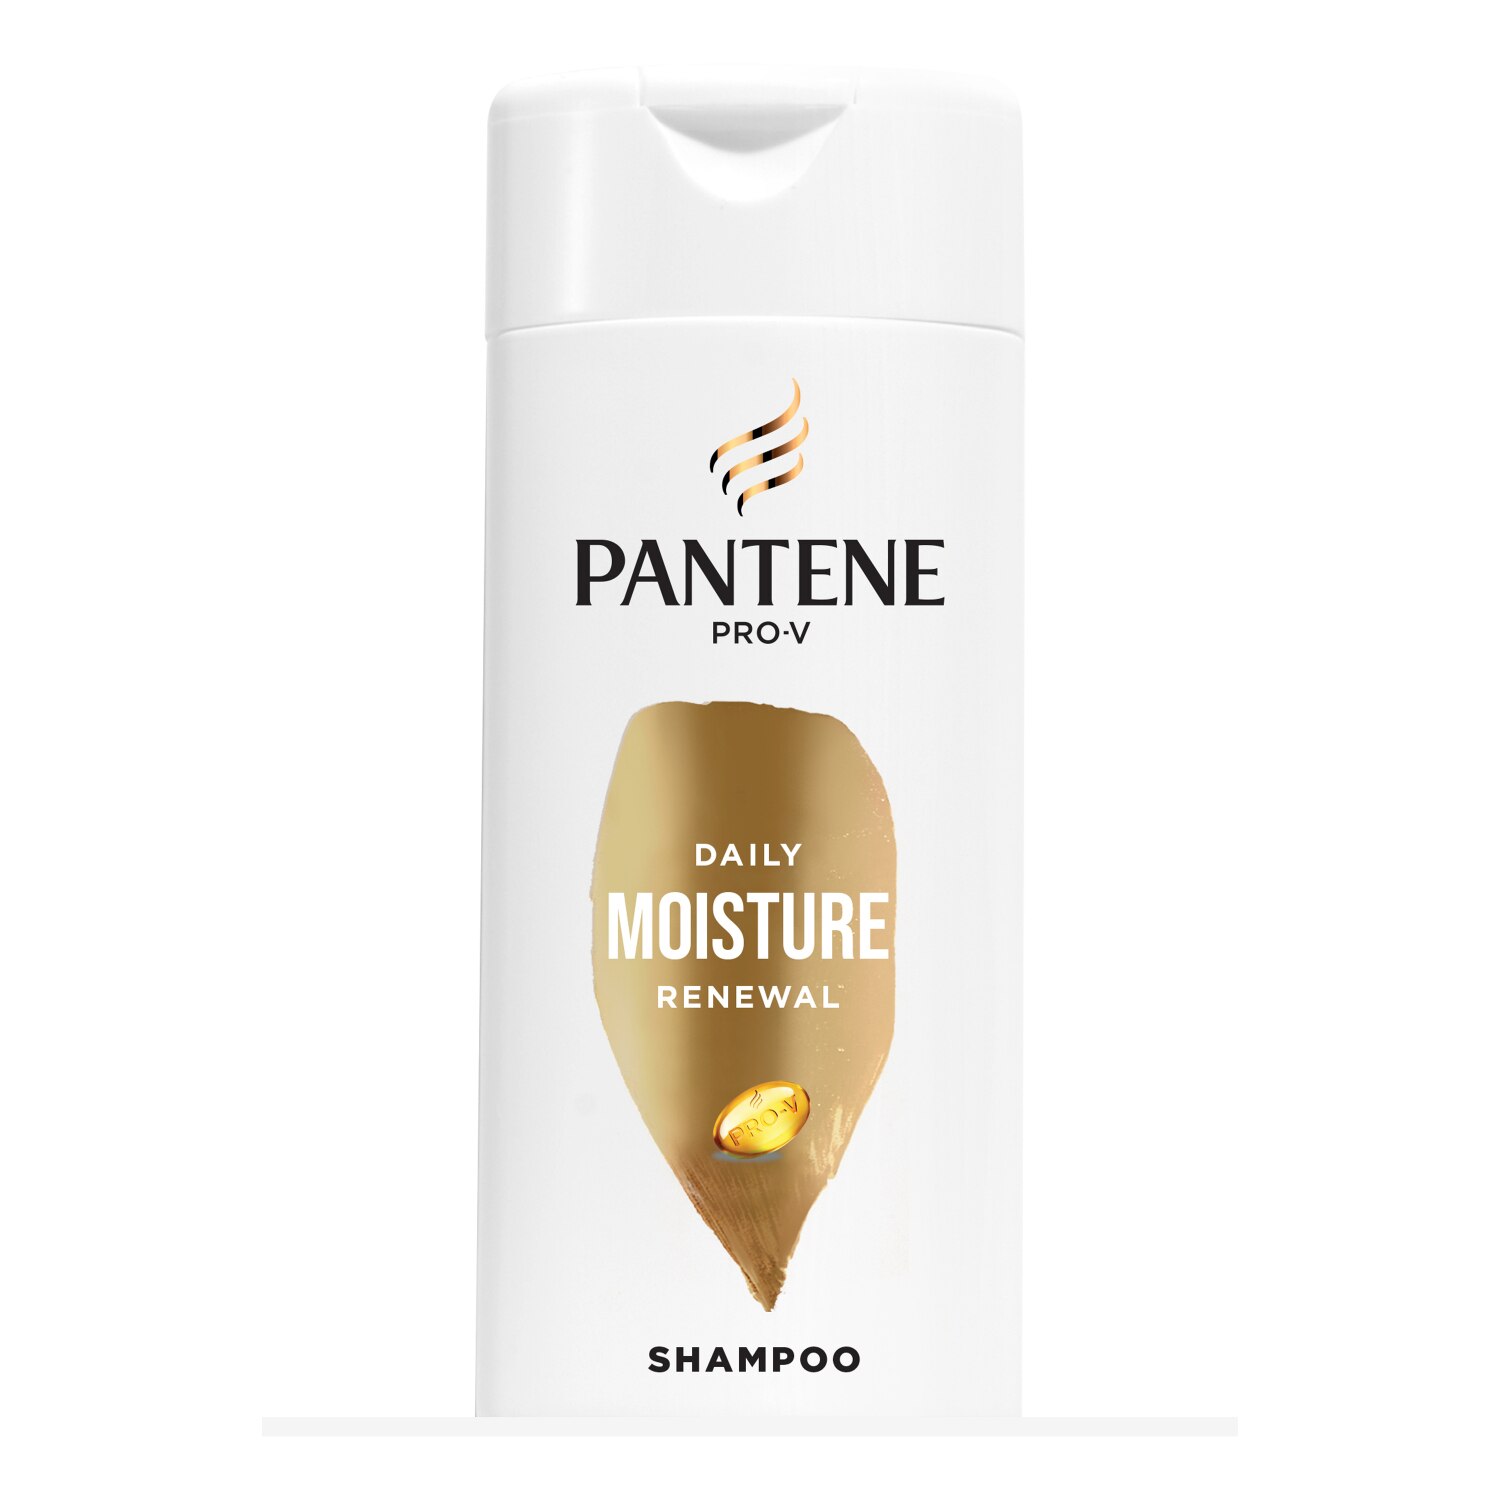 Pantene Pro-V Daily Moisture Renewal Shampoo, 3.38 OZ